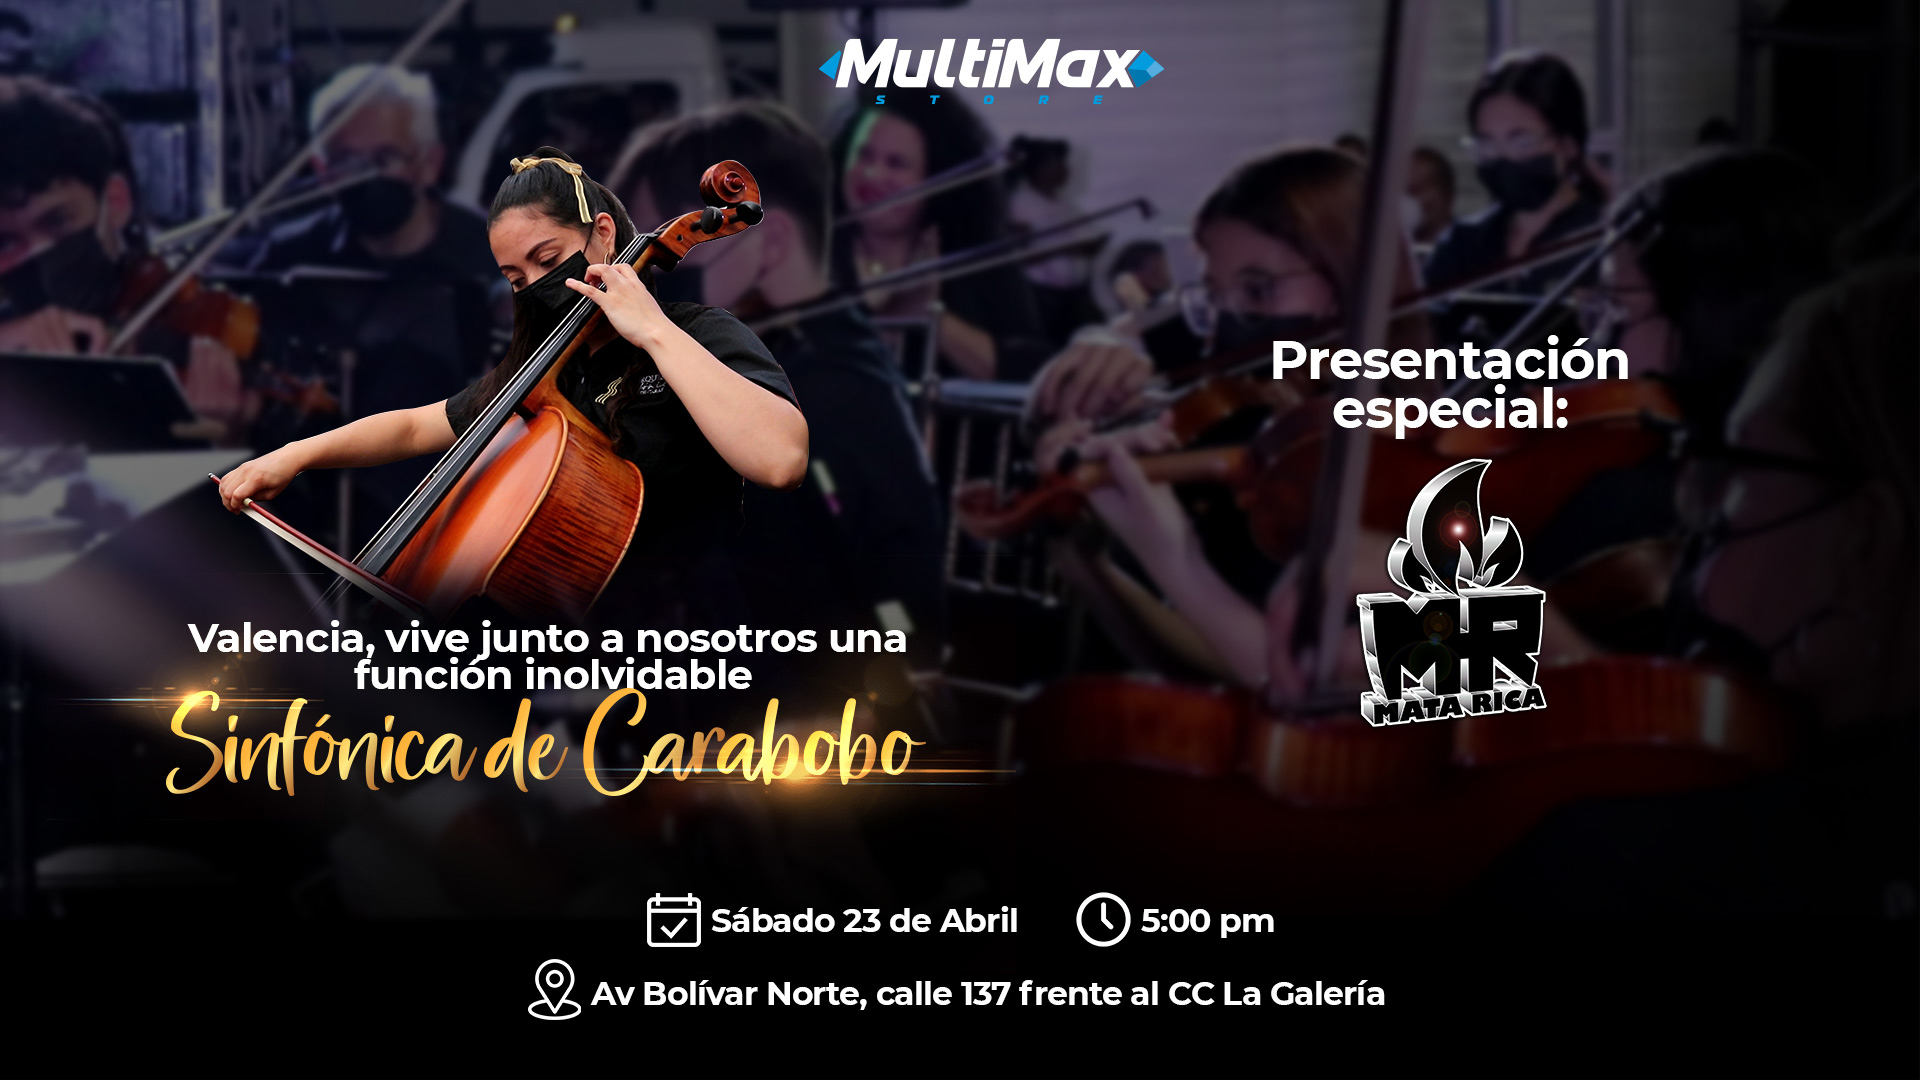 Orquesta Sinfónica de Carabobo Multimax Valencia